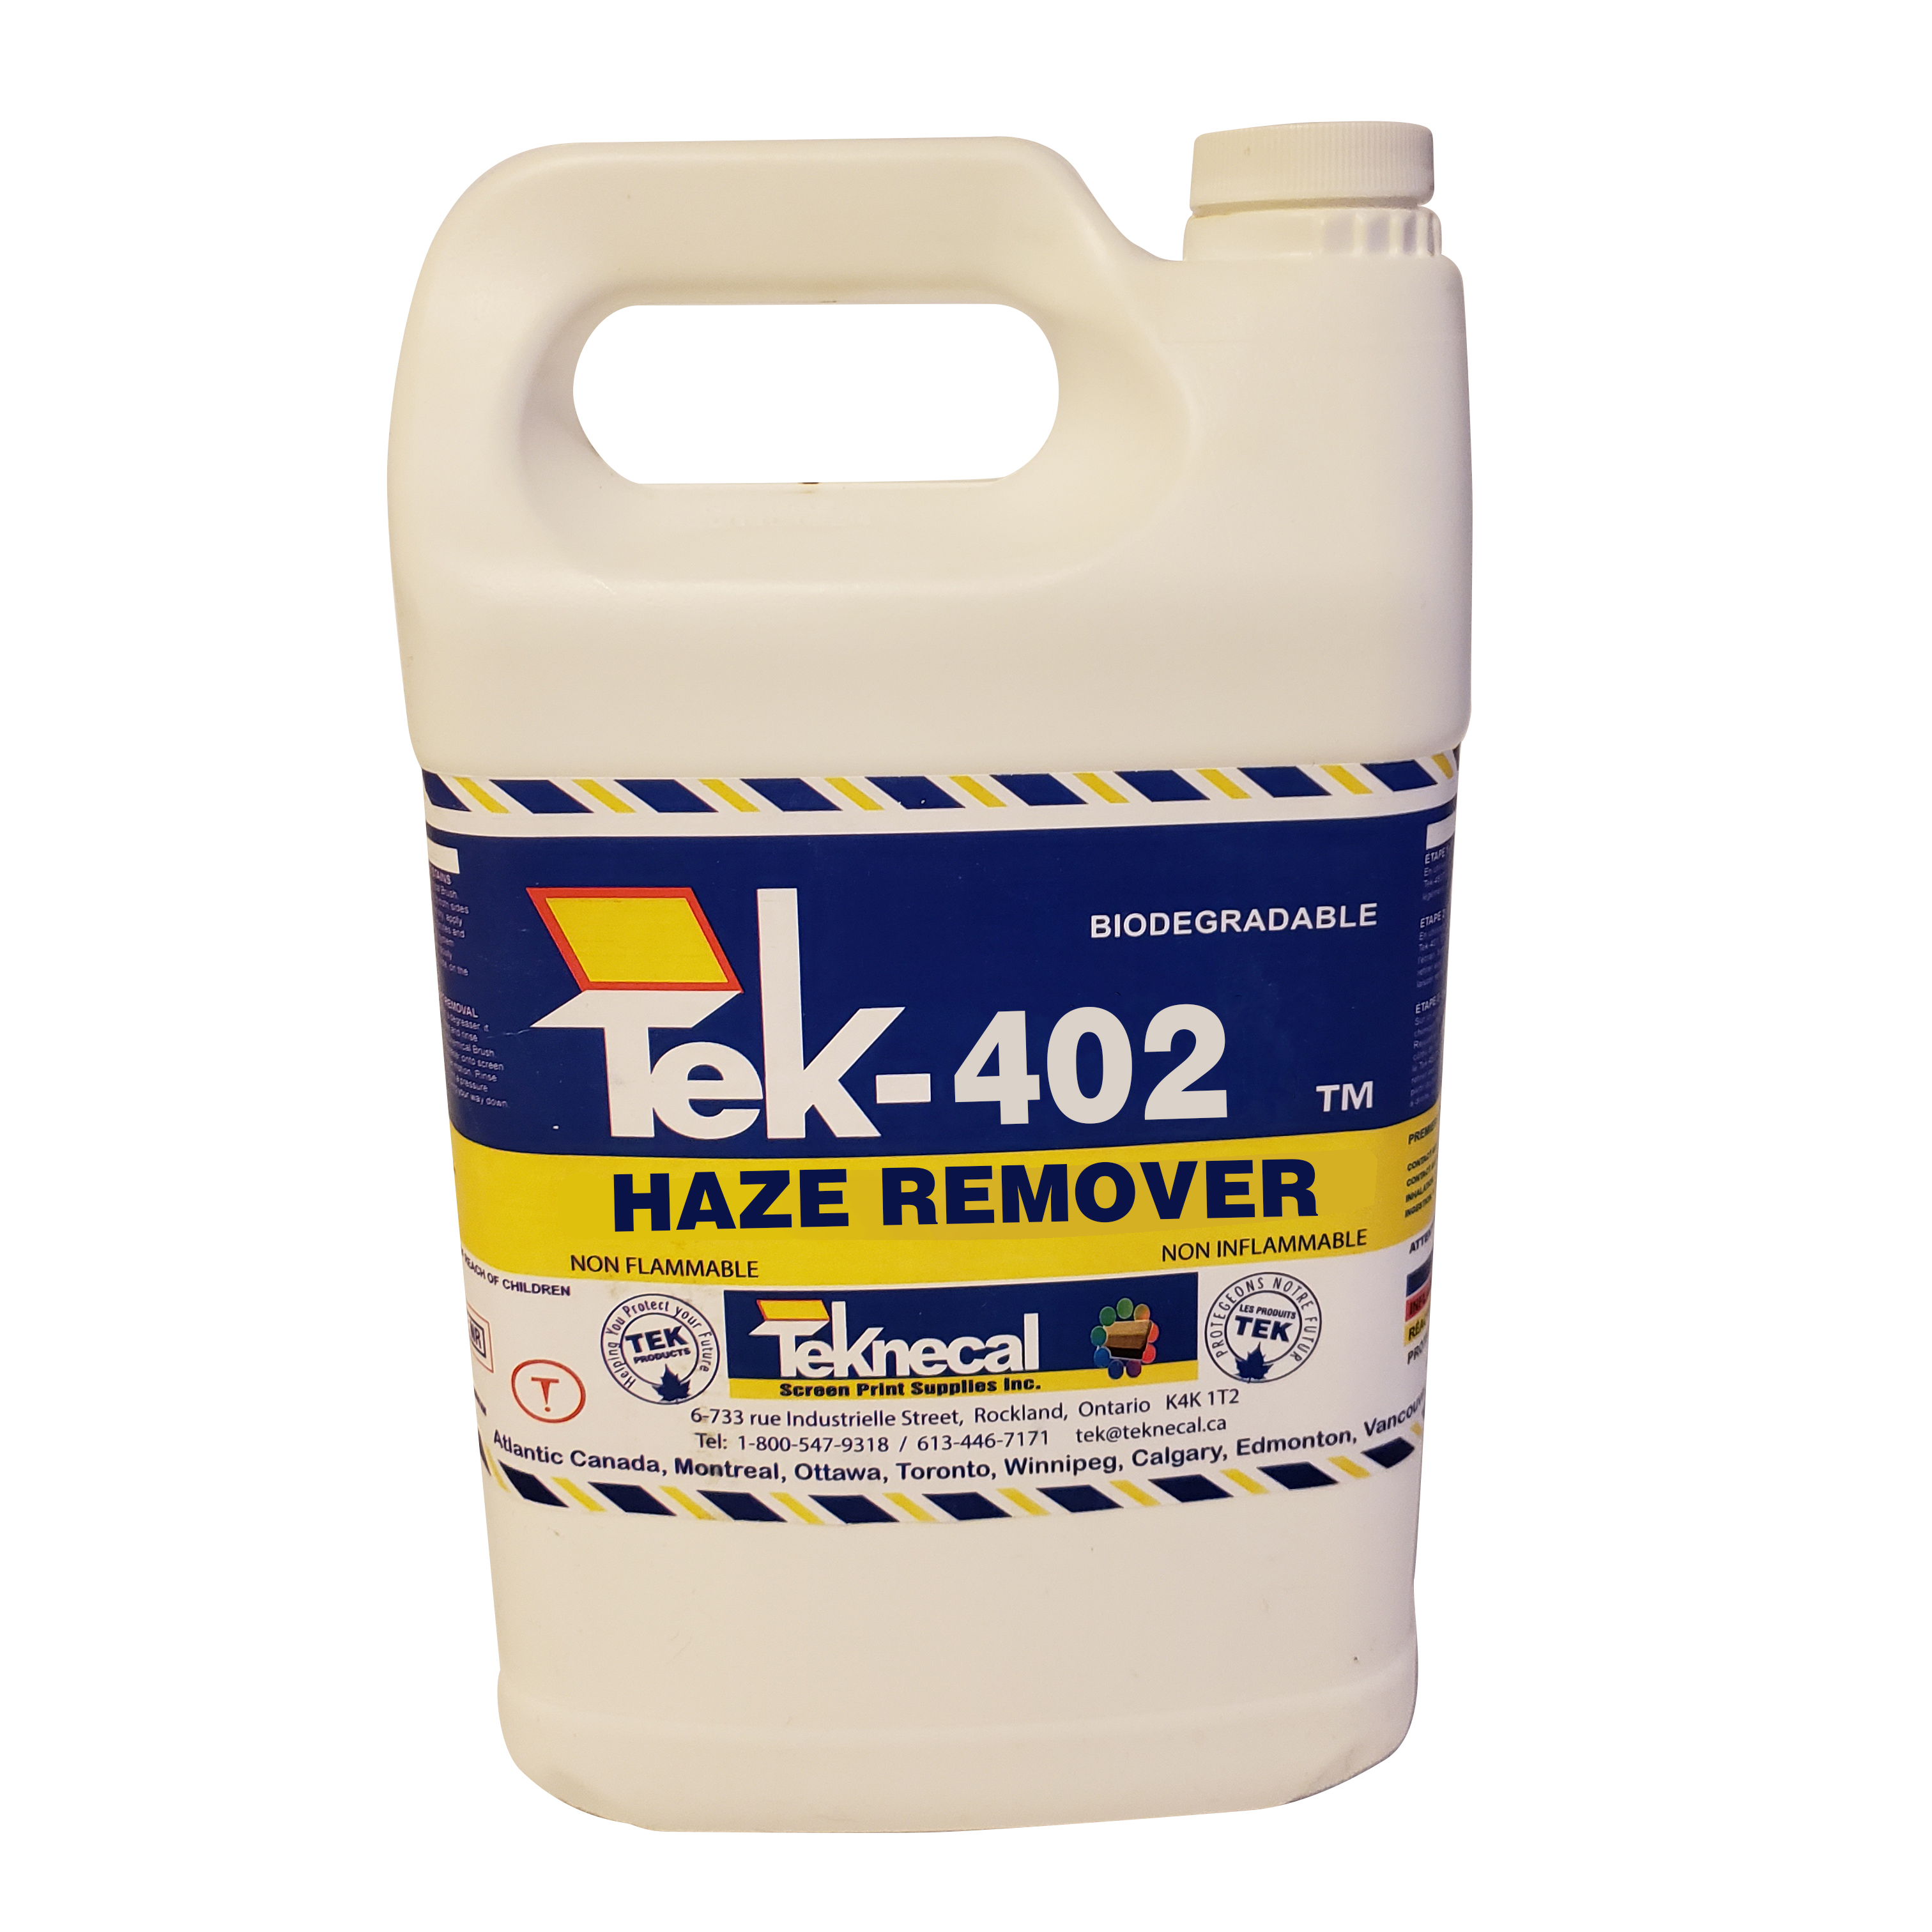 Teknecal Haze Remover TEK-402